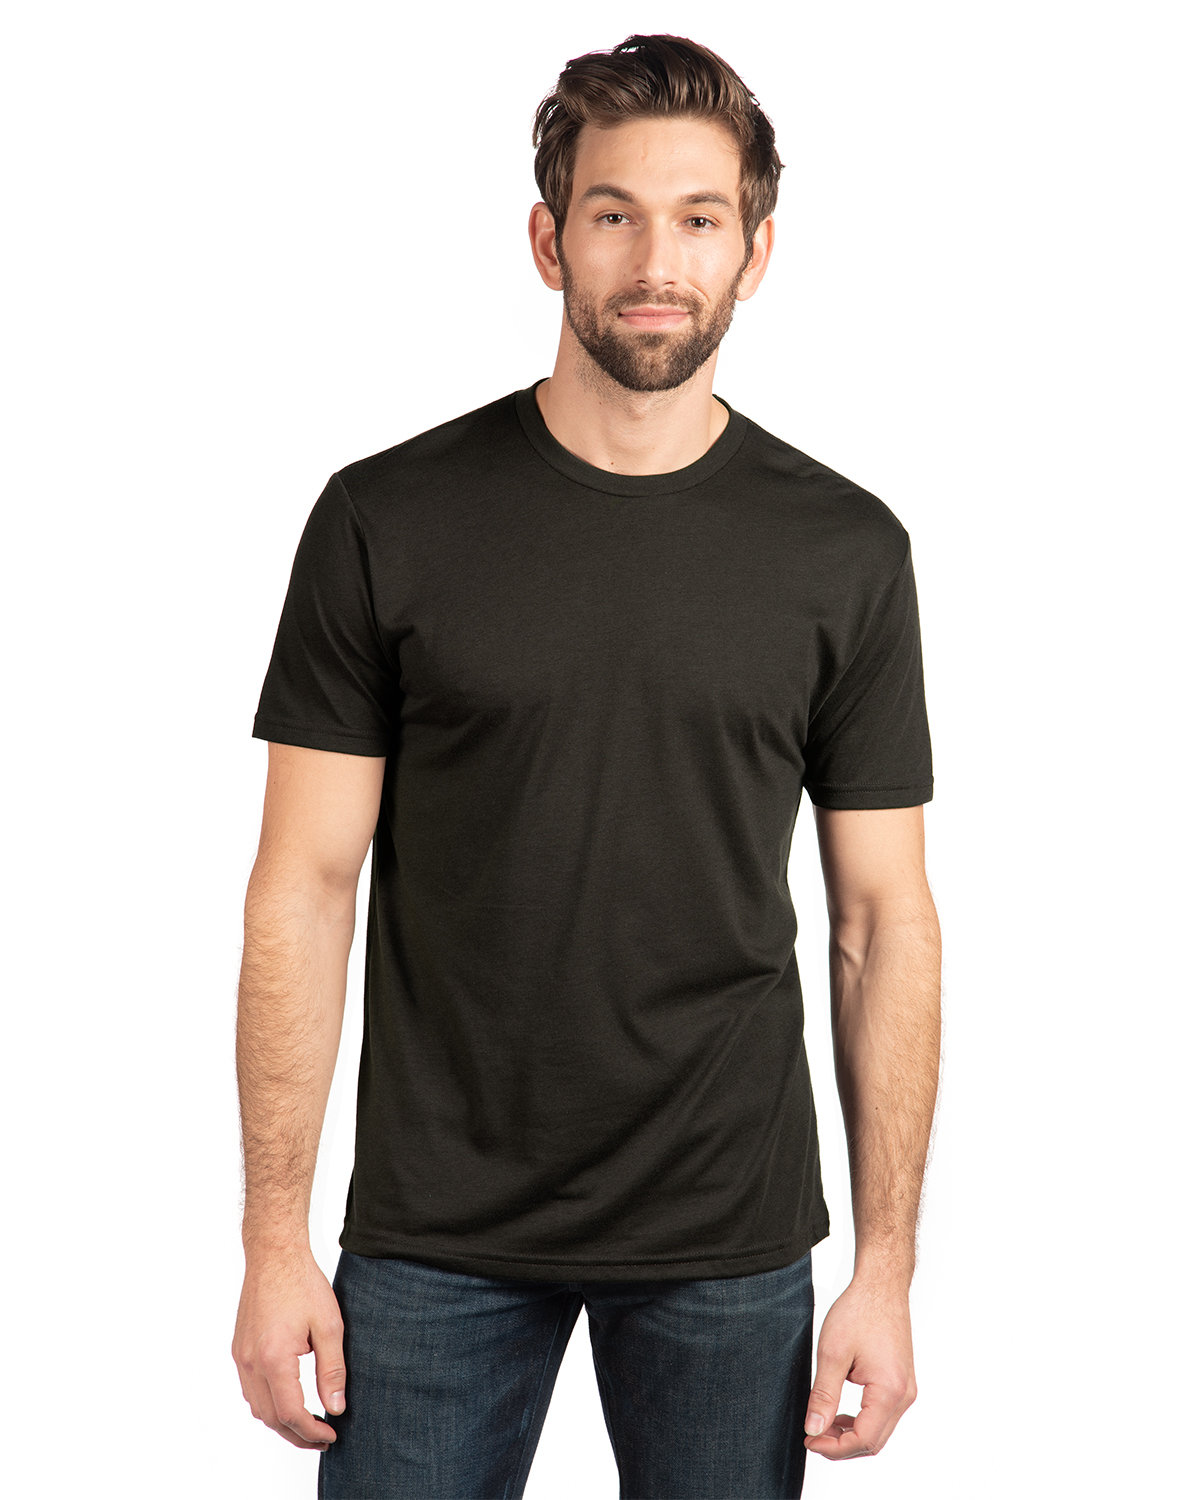 Next Level Apparel Unisex Triblend T-Shirt graphite black 